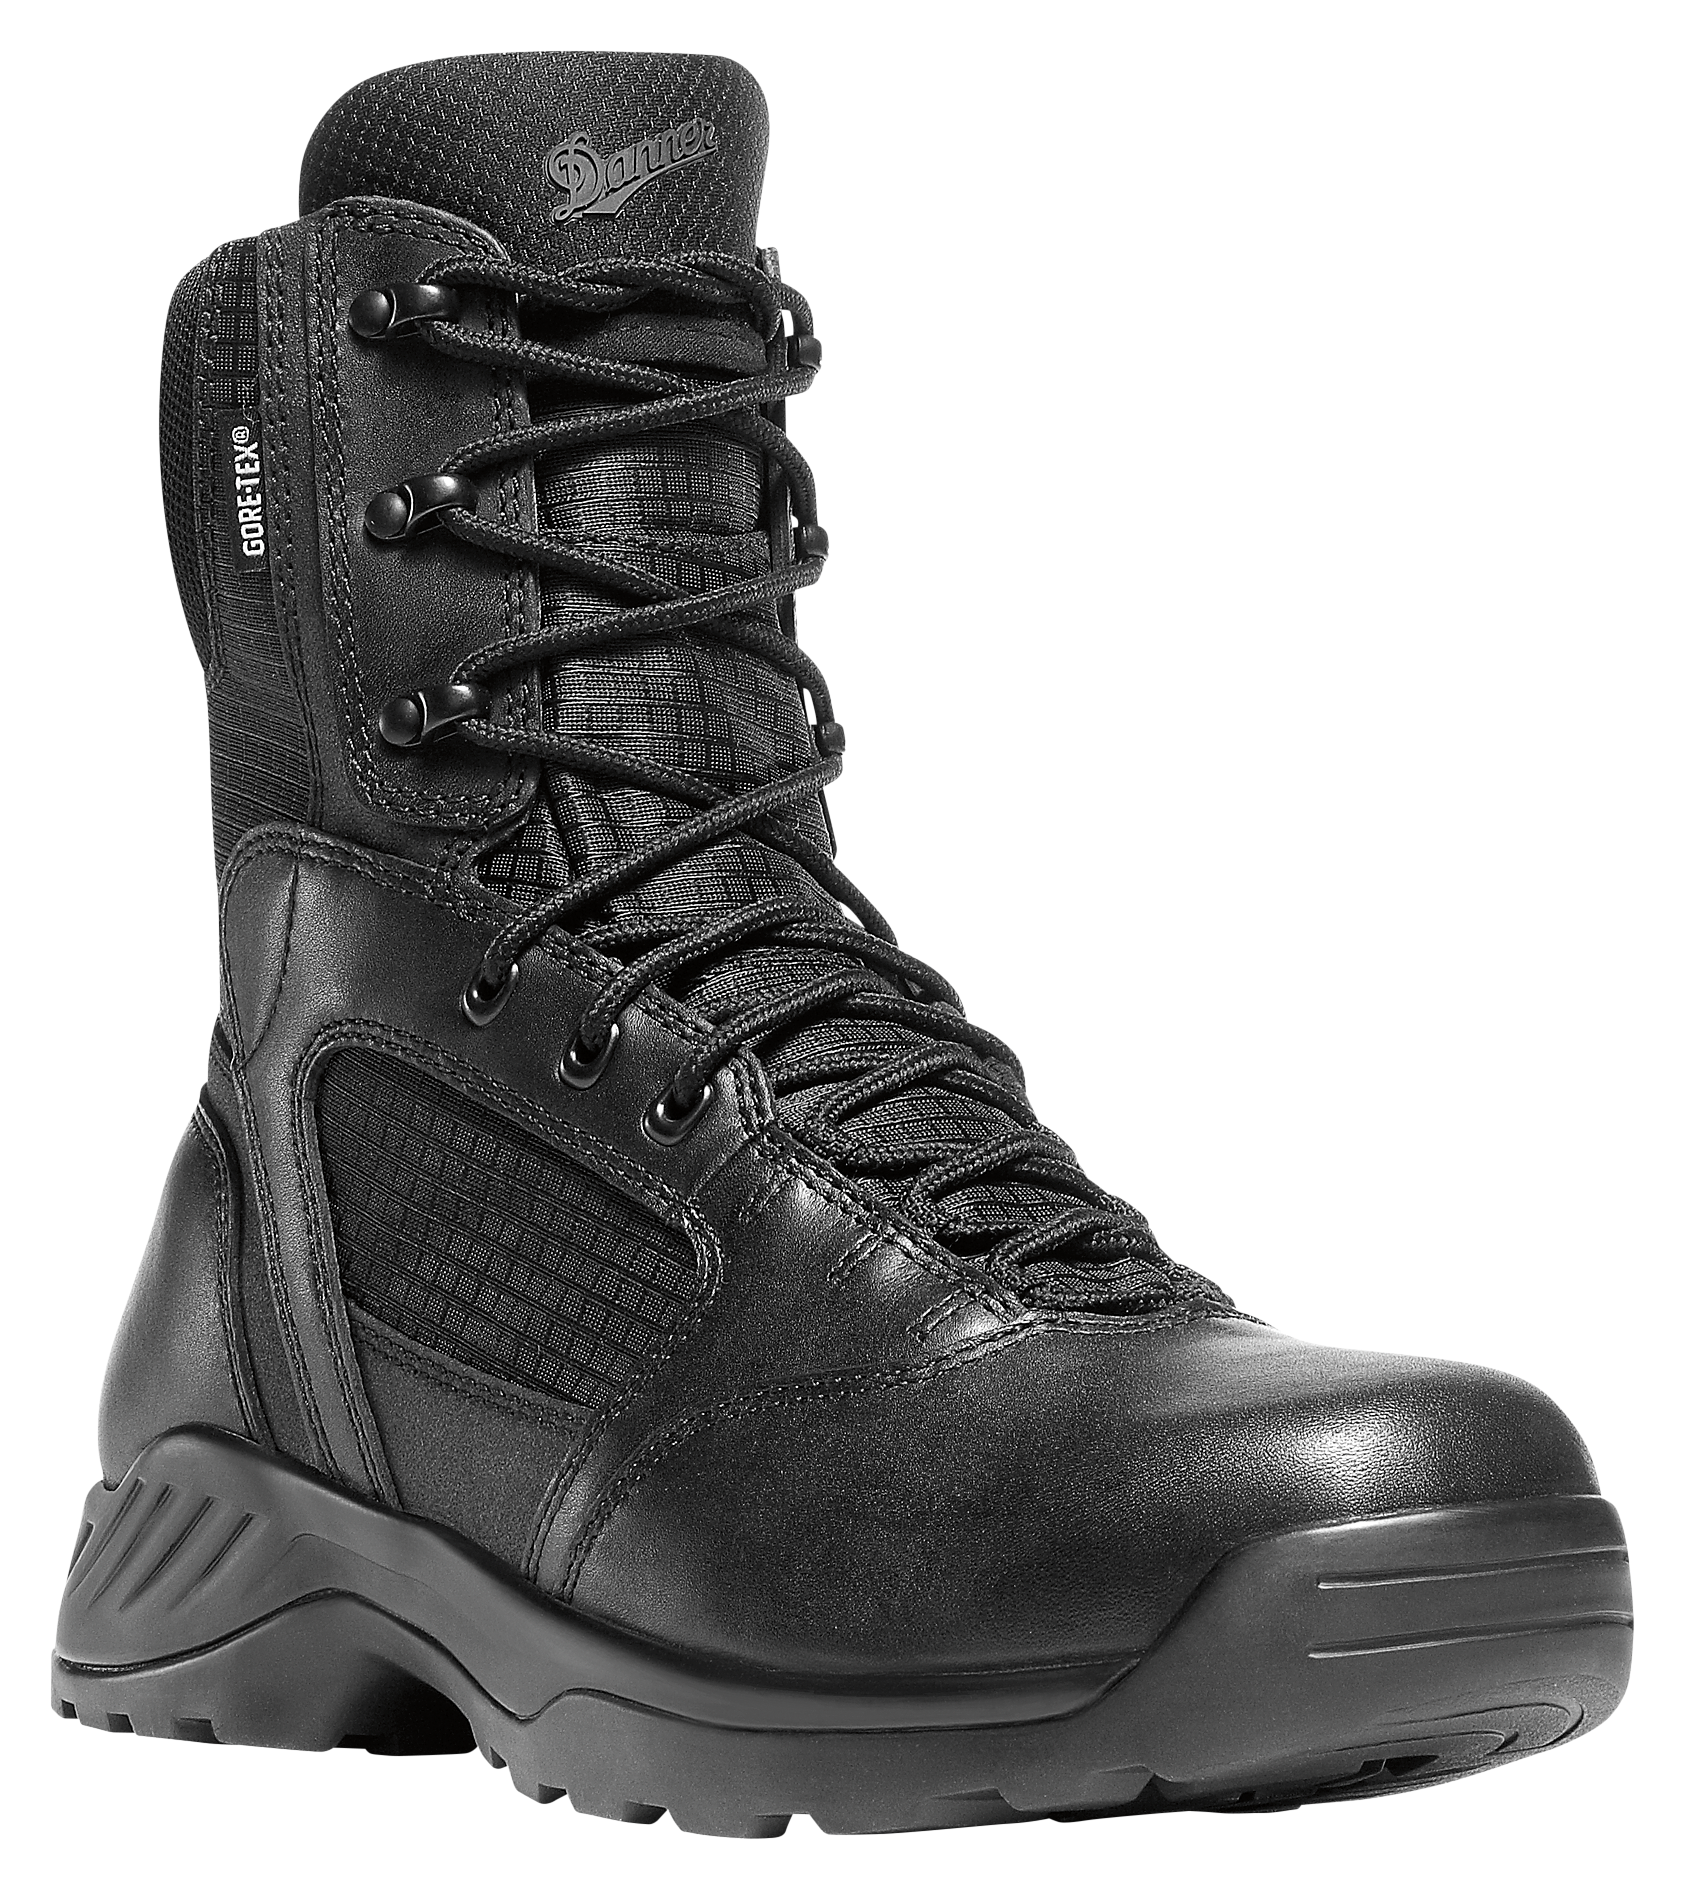 Danner Kinetic GTX Side-Zip Waterproof Tactical Duty Boots for Men - Black - 6.5M